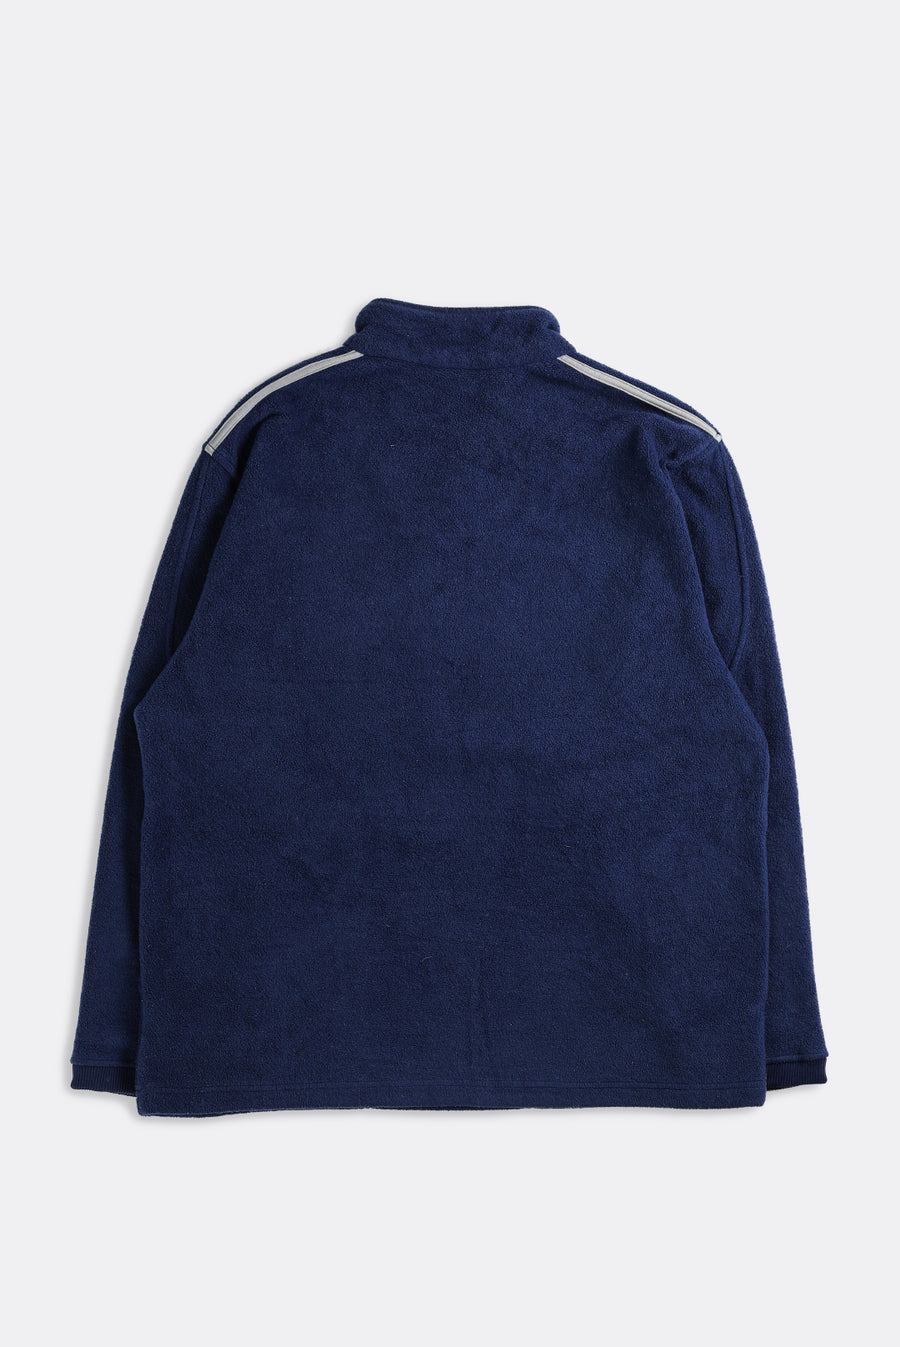 Vintage Adidas Fleece Sweater